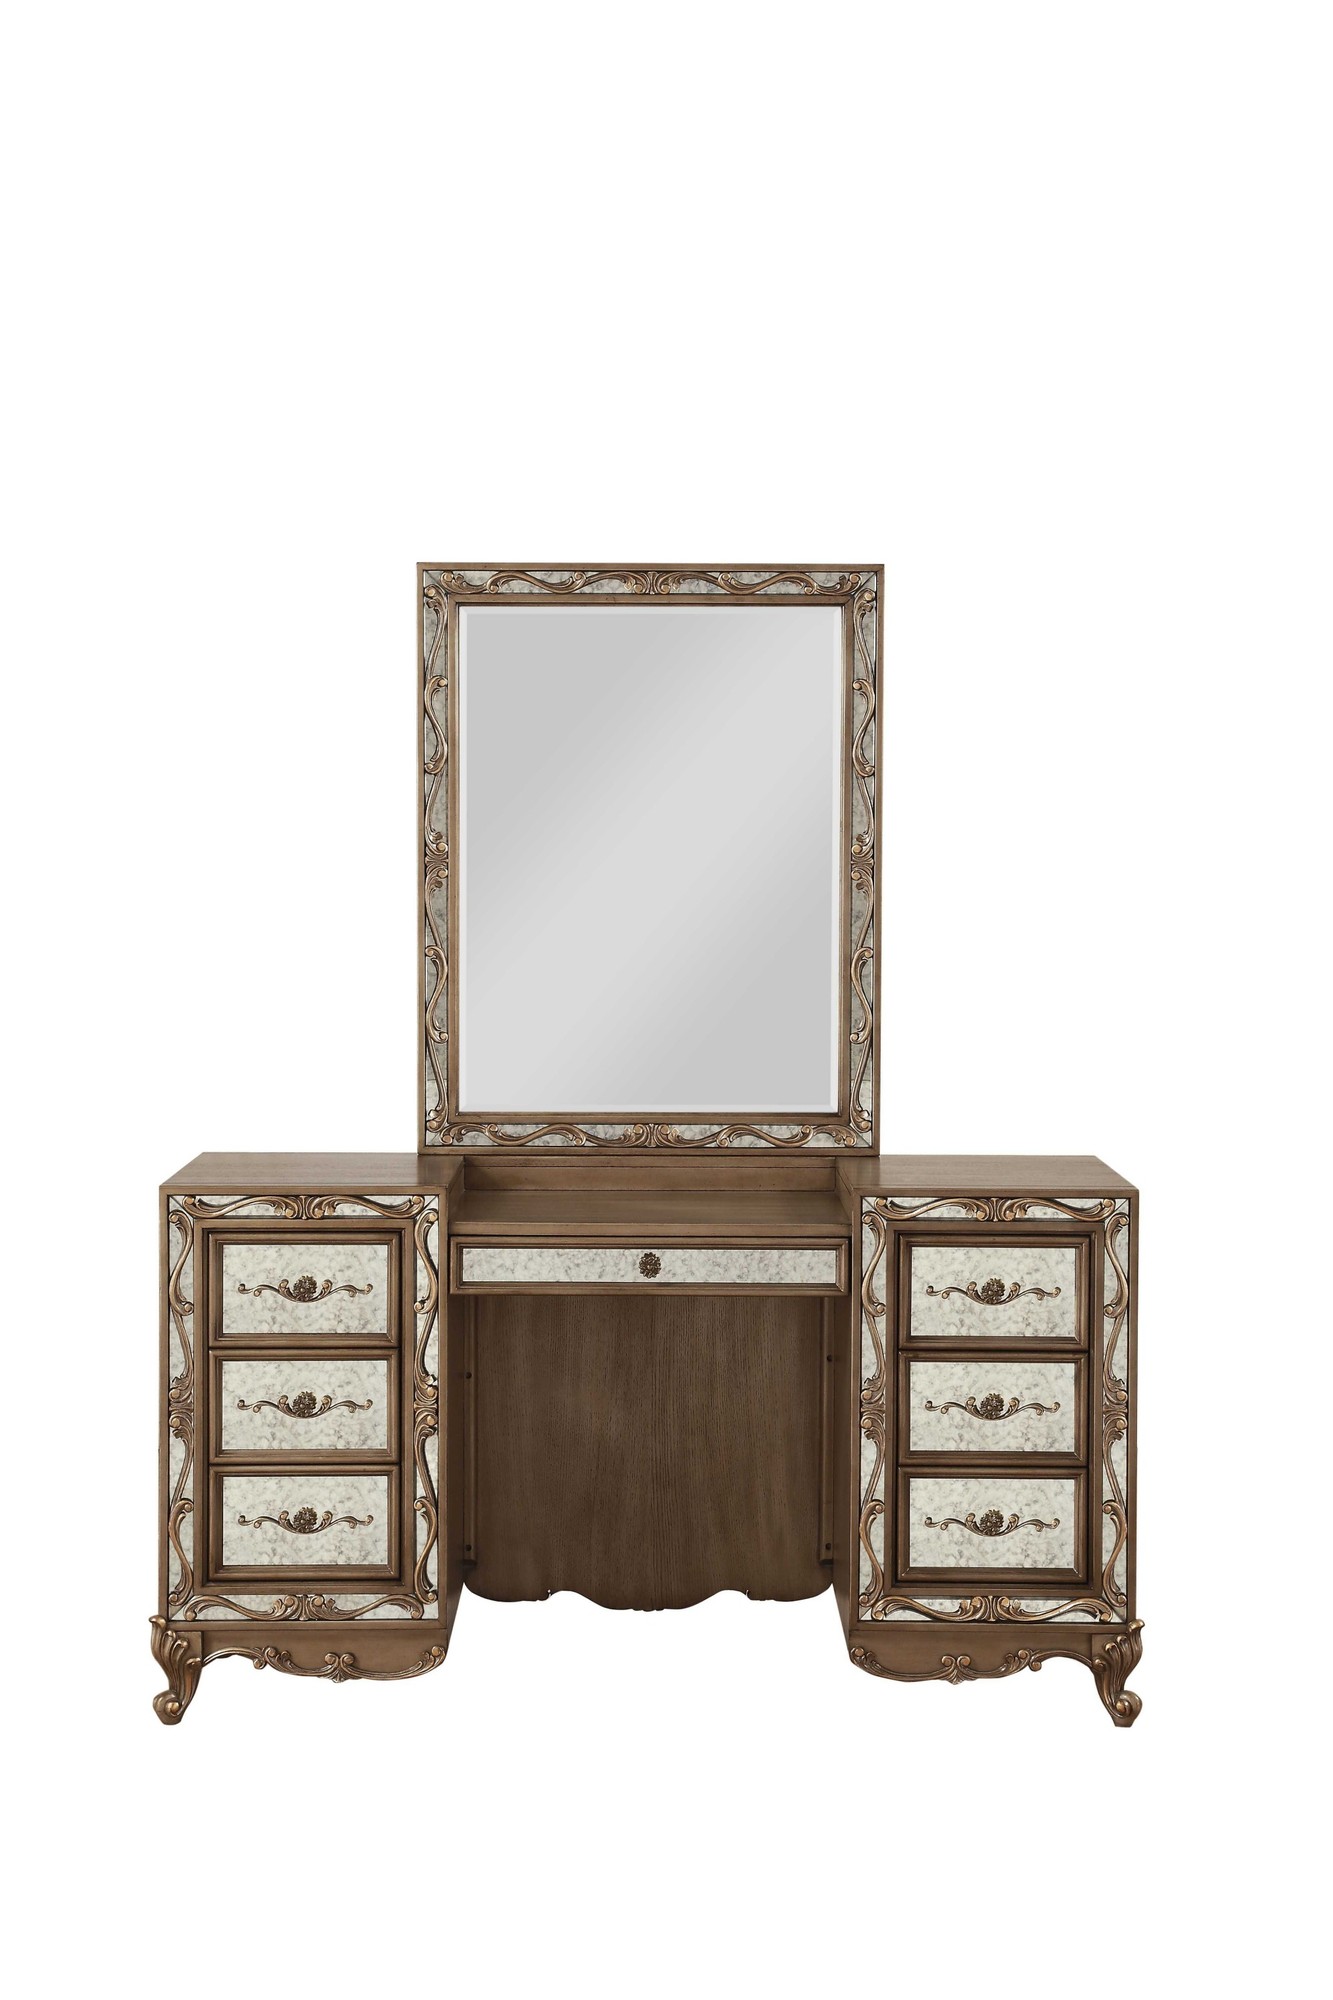 18" X 58" X 32" Antique Gold Wood Mirror Vanity Desk